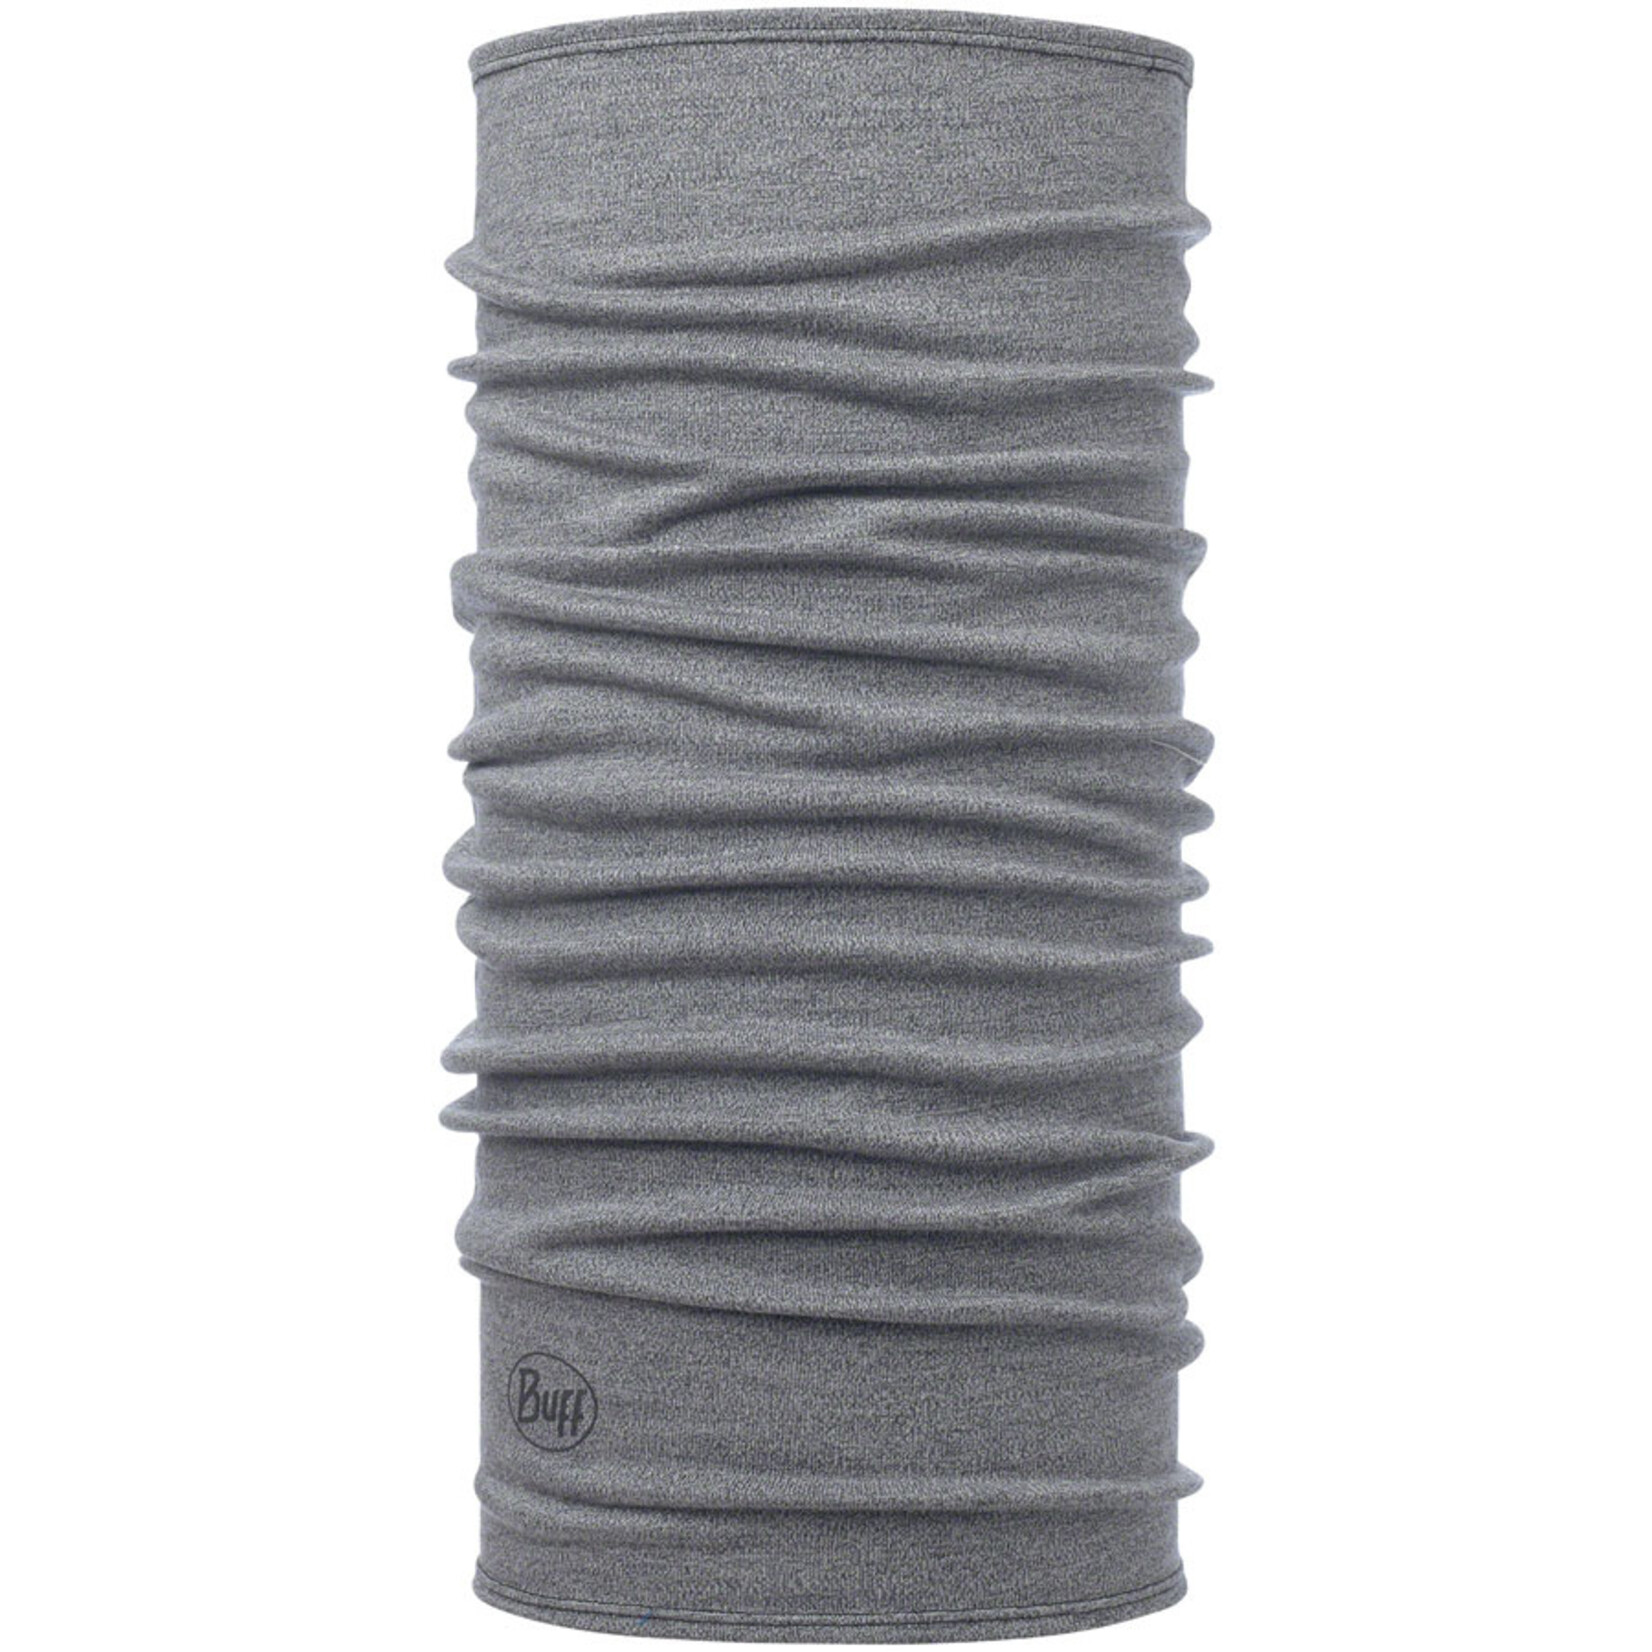 Buff Buff Midweight Merino Wool Multifunctional Headwear - Light Gray Melange, One Size